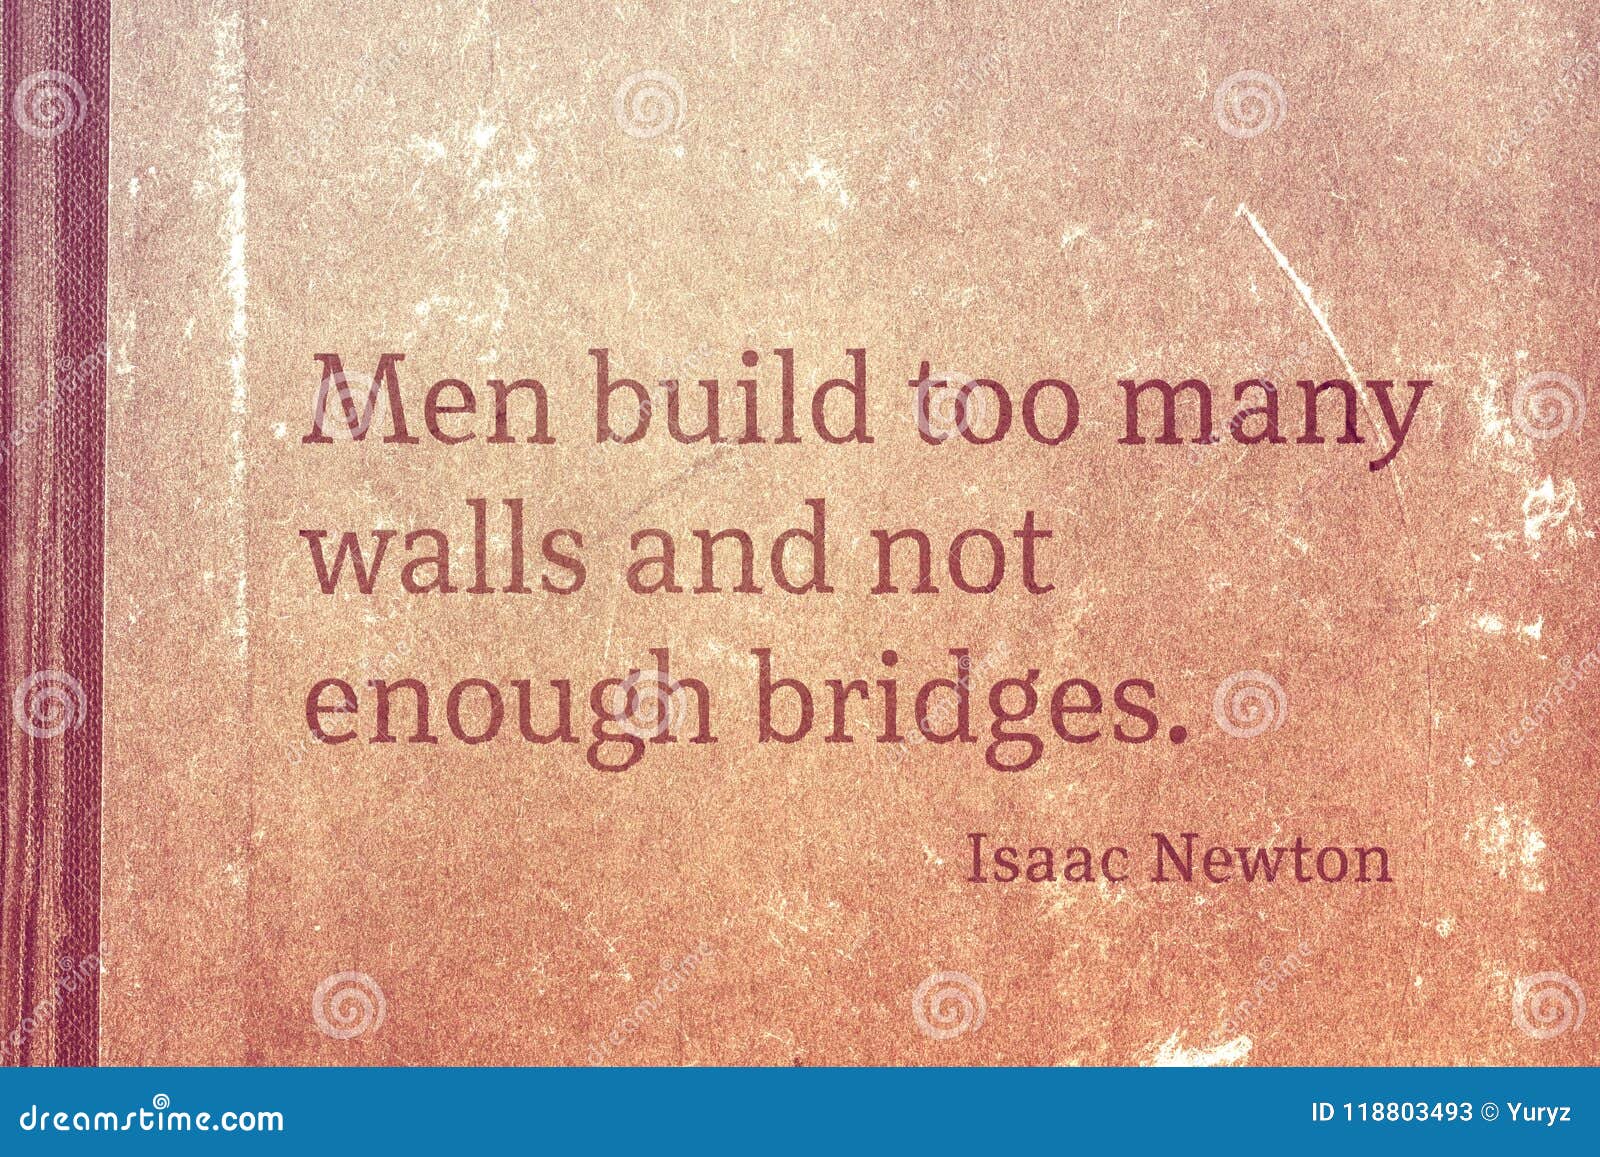 enough bridges newton